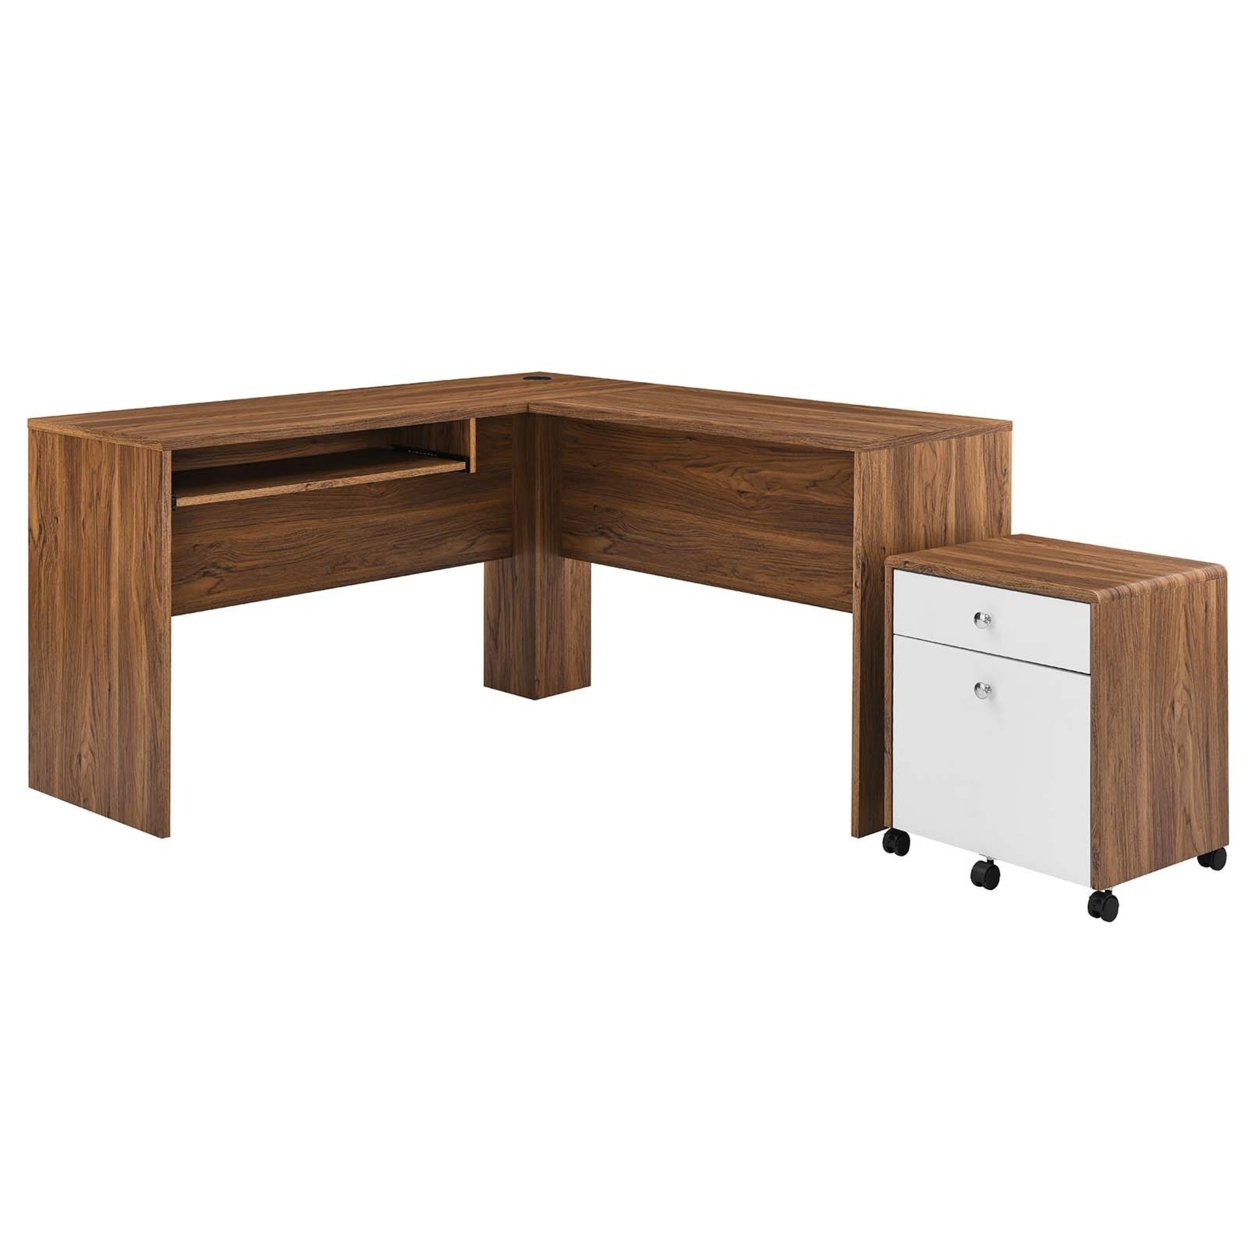 Transmit Wood Desk And File Cabinet Set, Walnut White